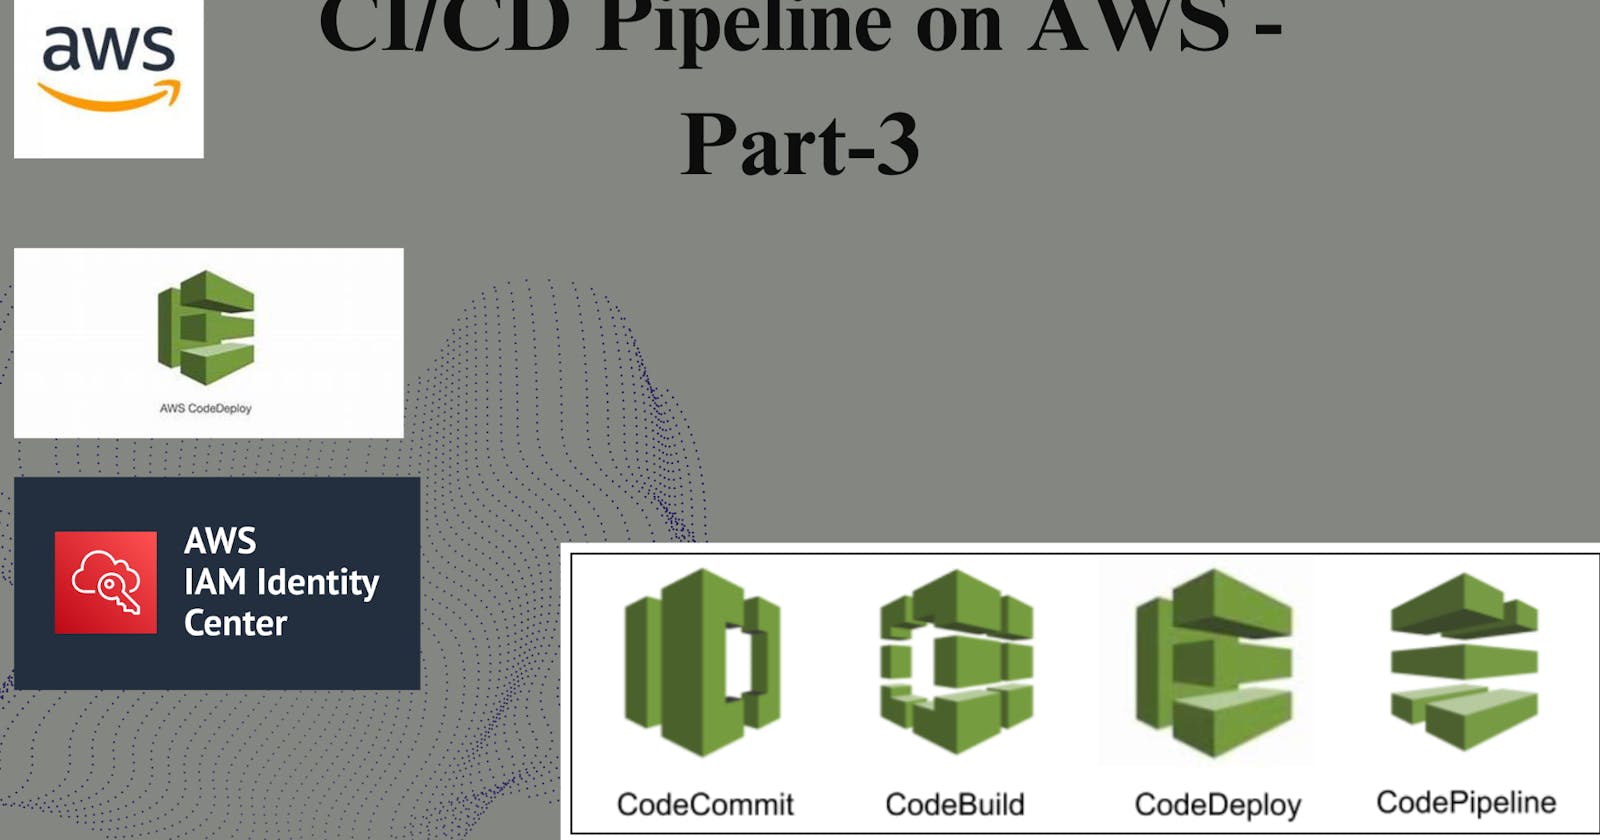 CI/CD Pipeline on AWS - Part 3